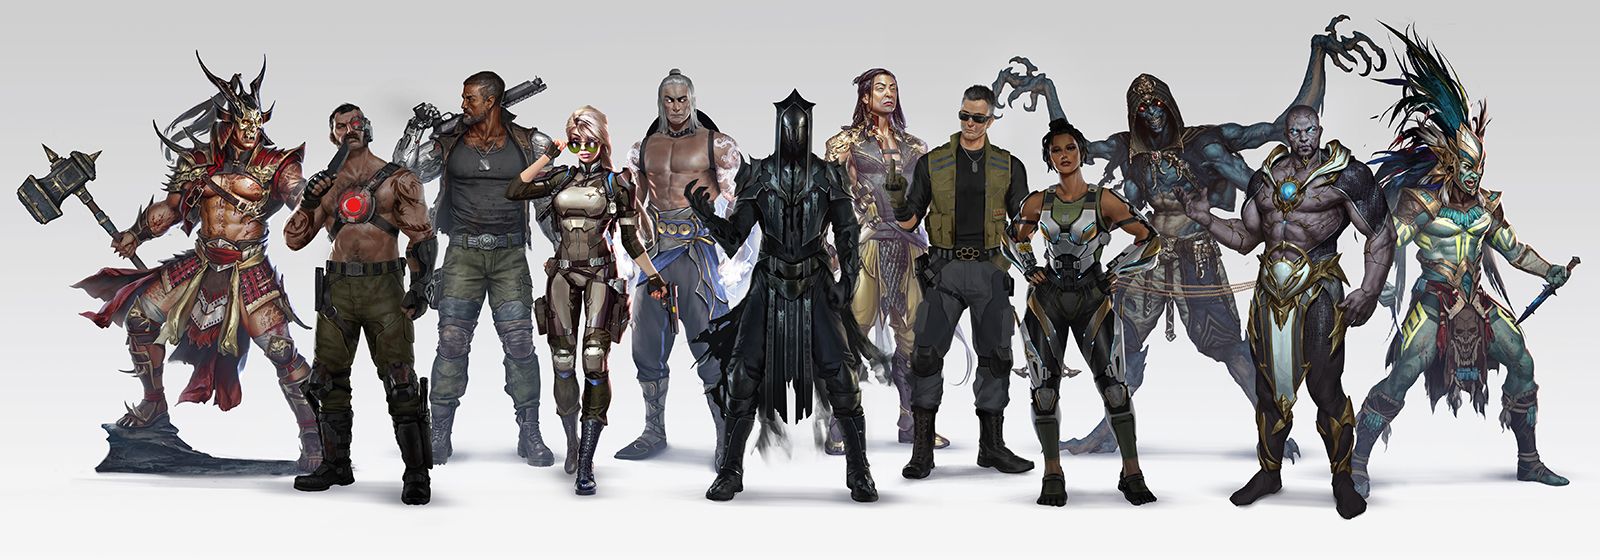 Mortal Kombat 11 Characters Courtesy Of Netherrealm Studios